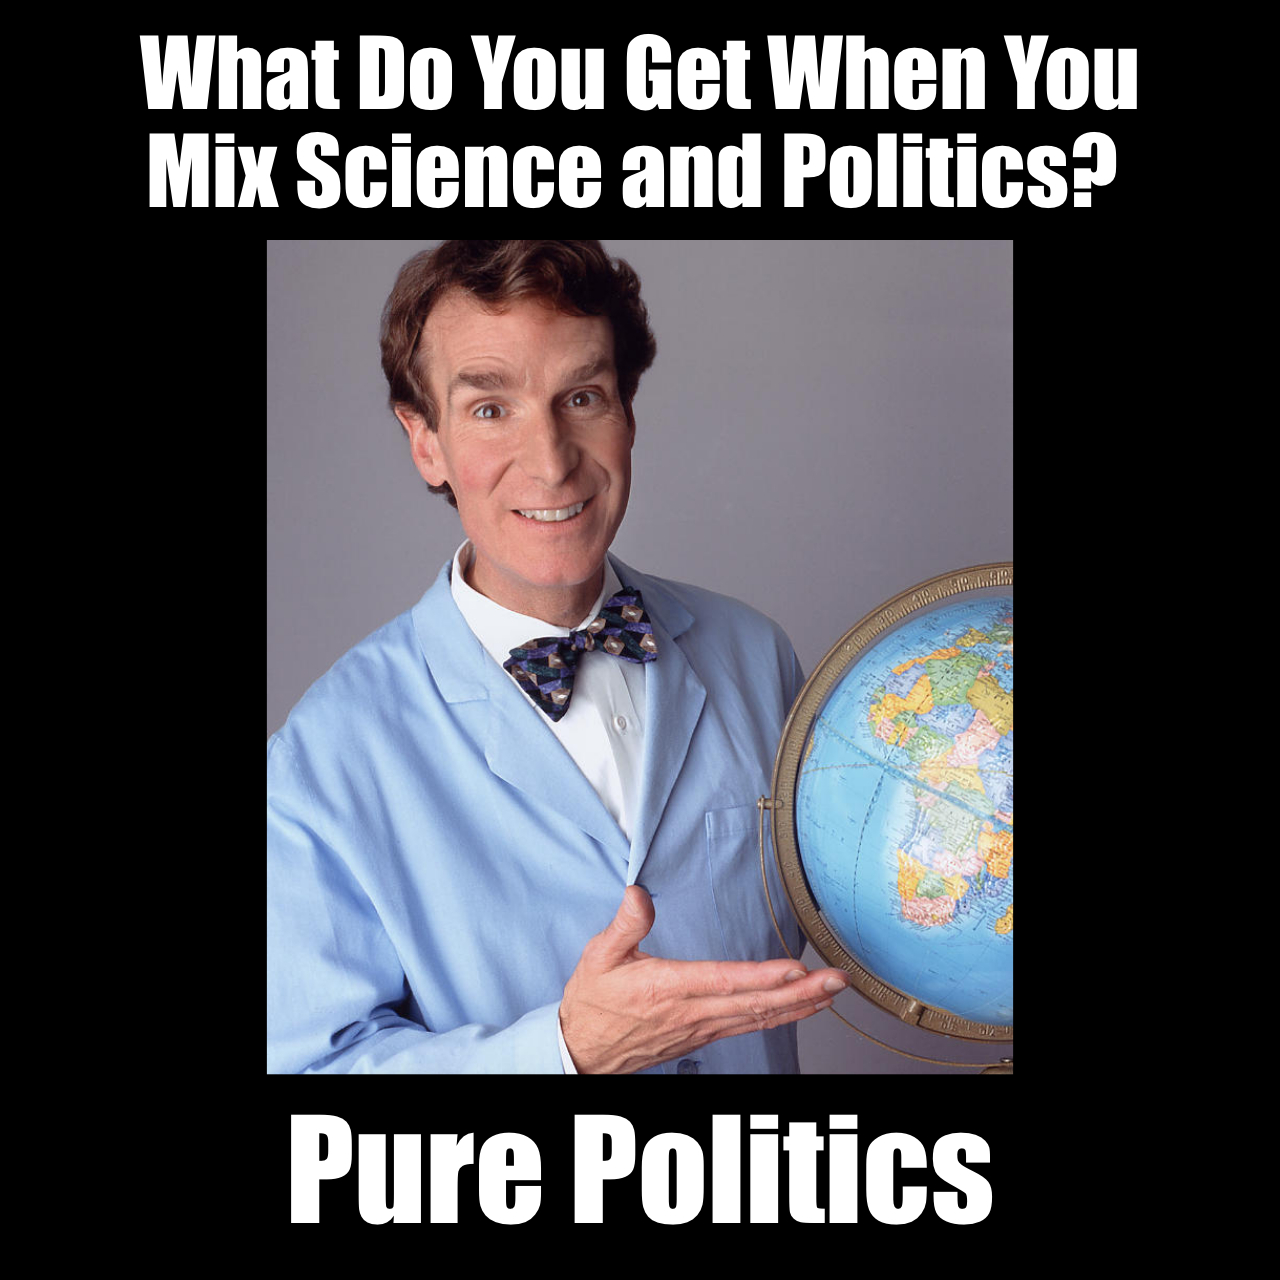 Bill Nye Pure Politics Meme: When You Mix Science and Politics